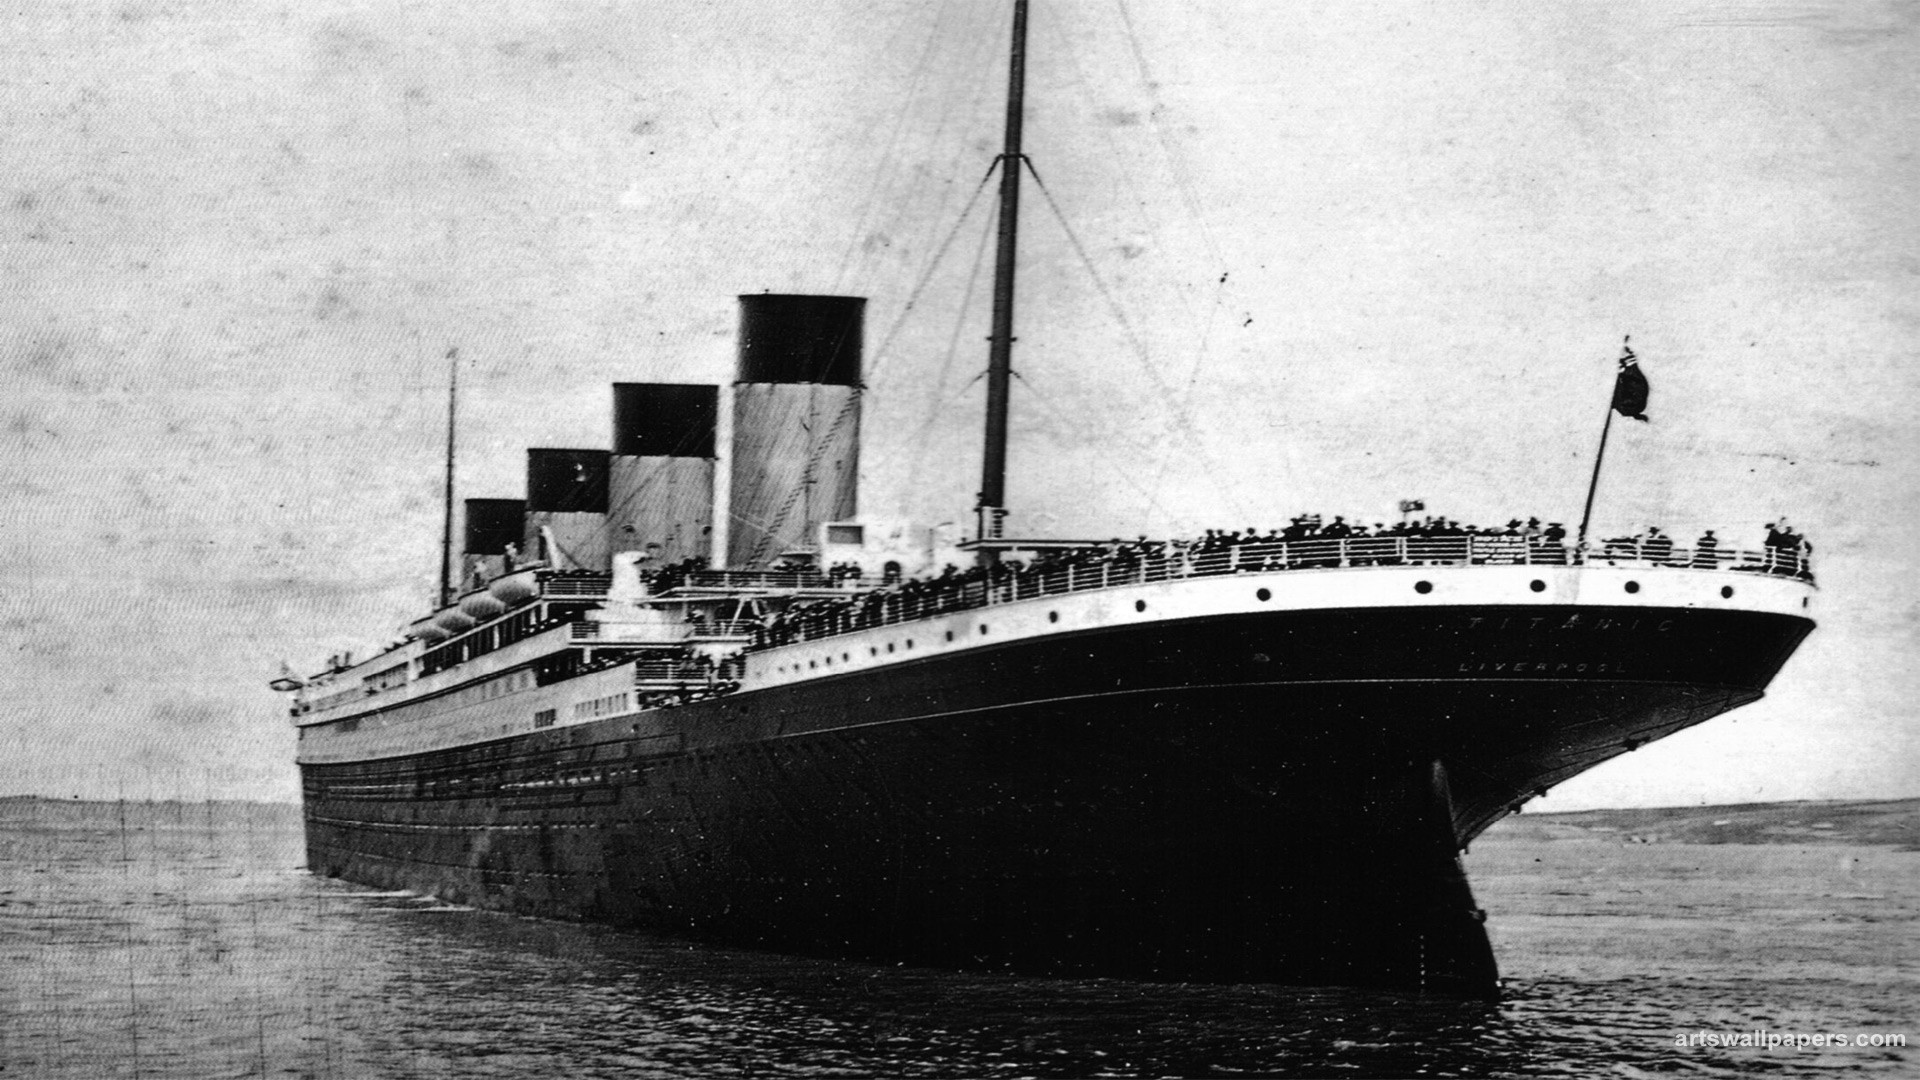 Titanic downloading